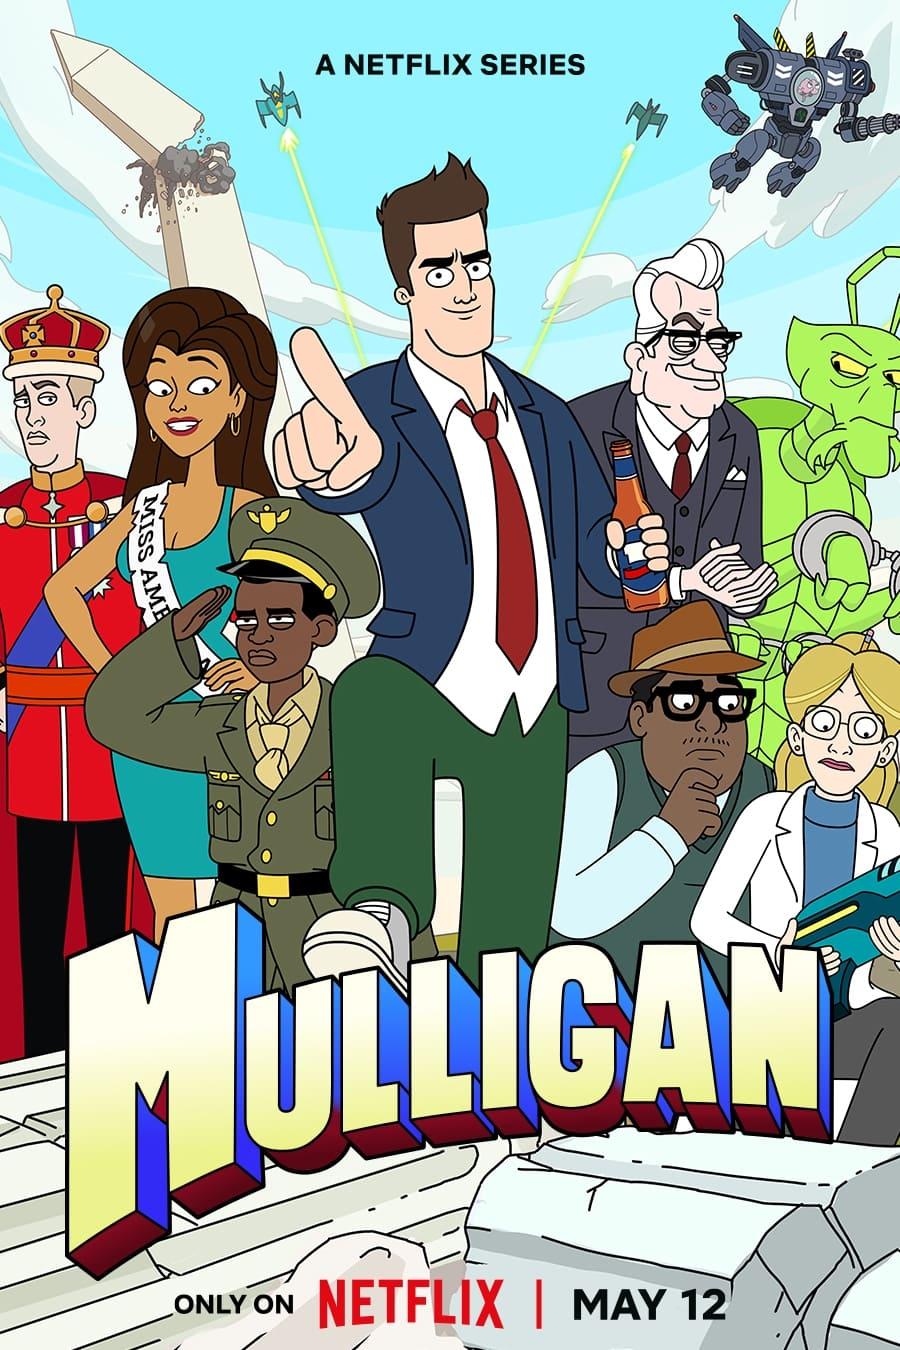 Mulligan poster